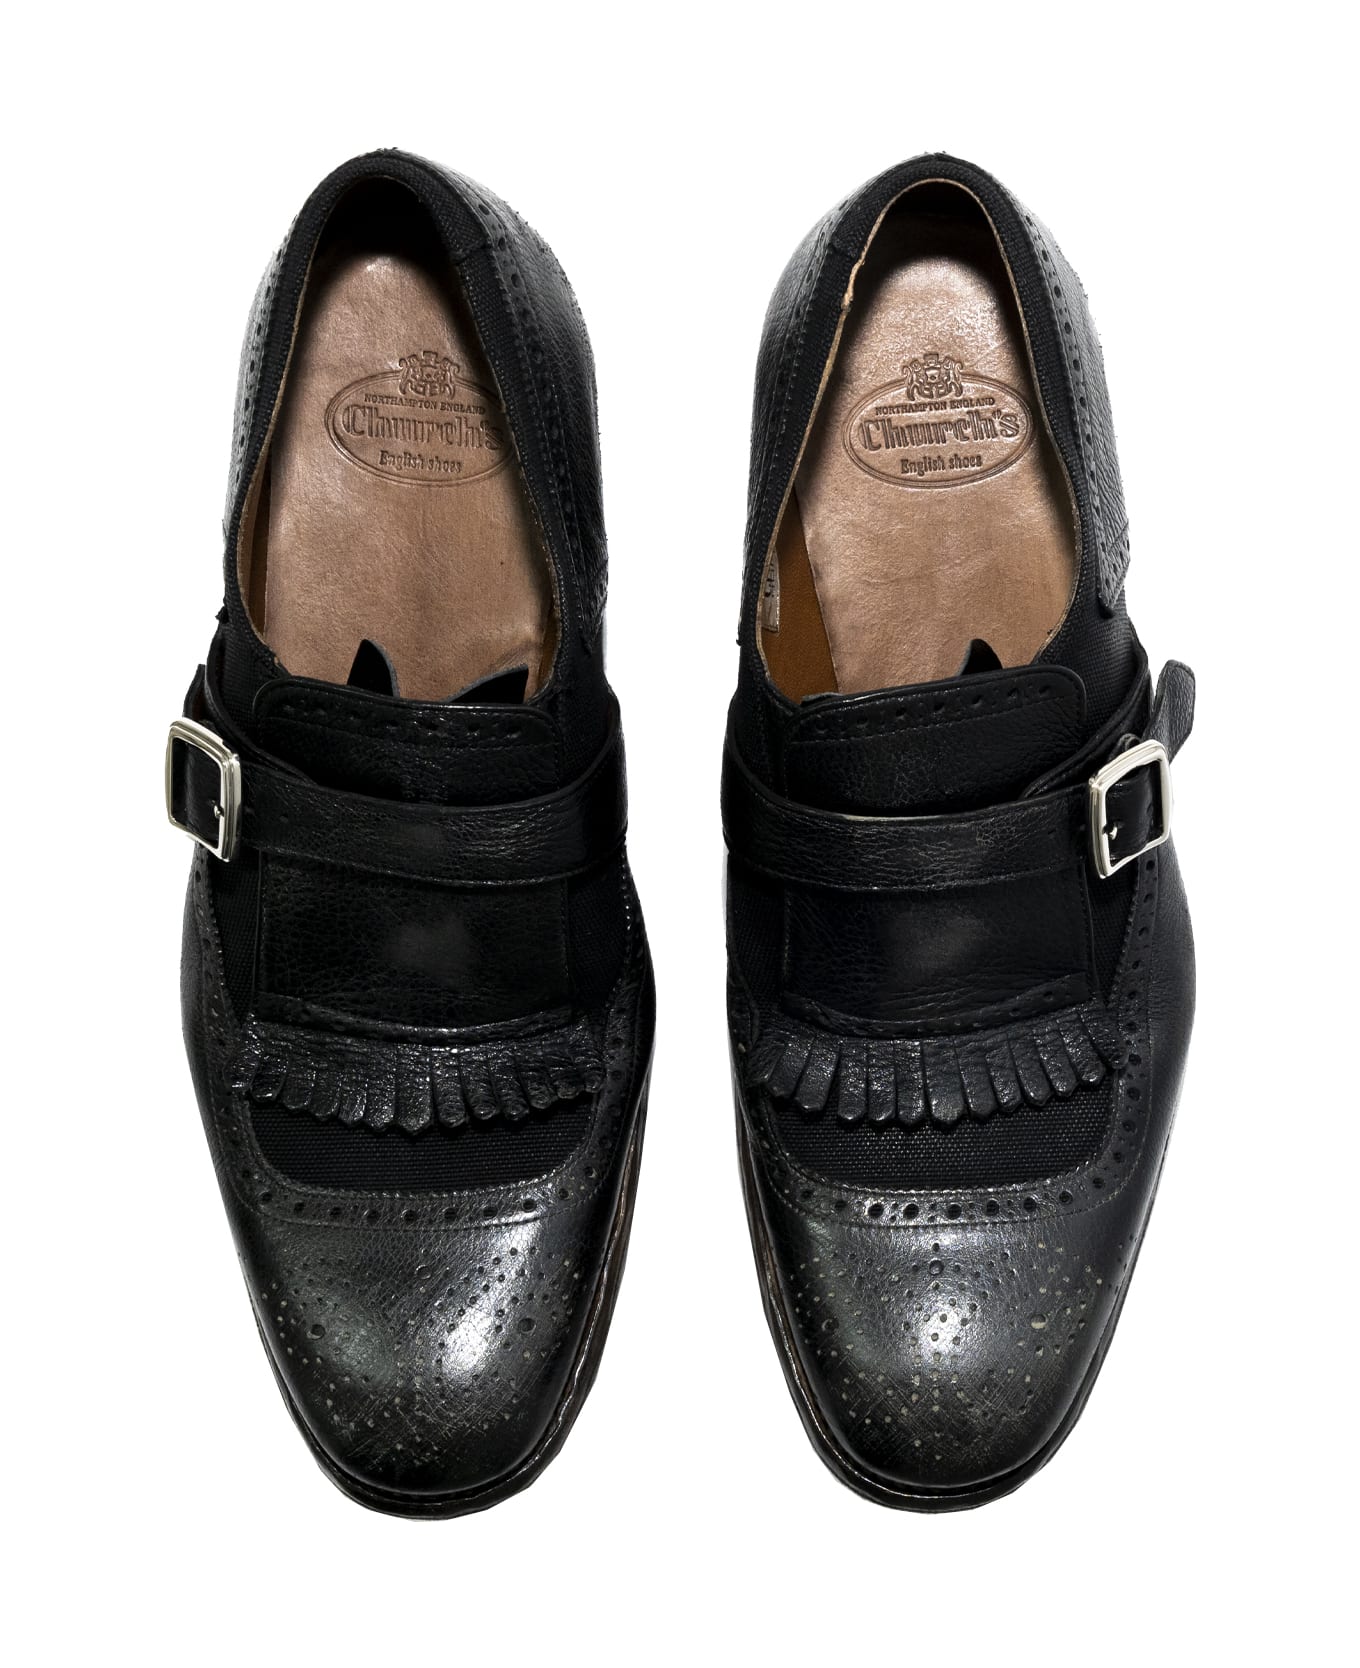 Church's Shoes - Black